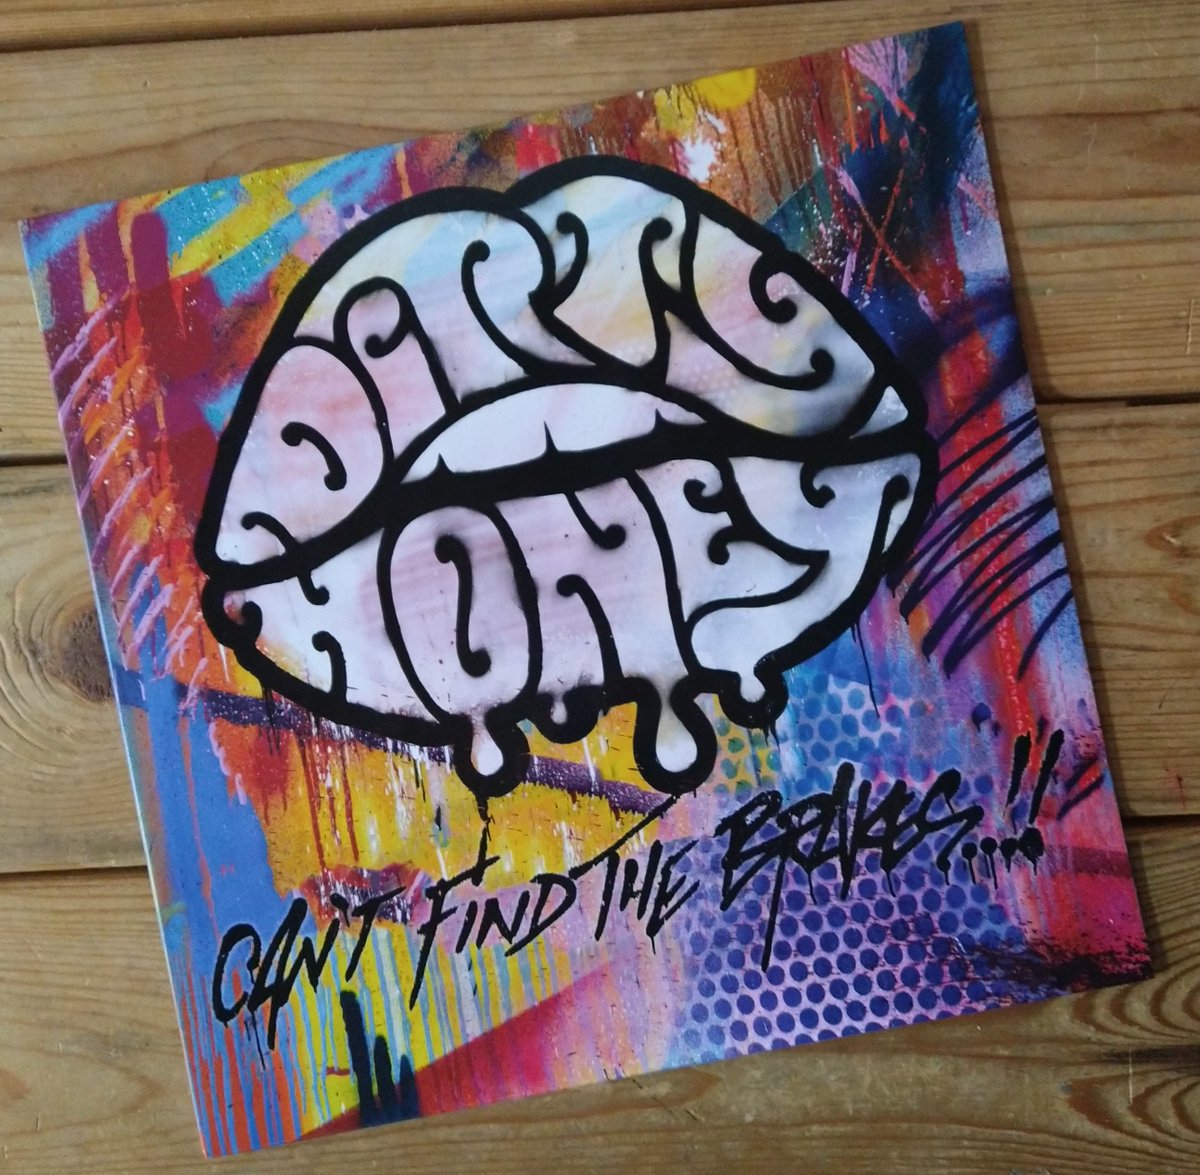 Spinning-#DirtyHoney #NowPlaying #vinylrecords